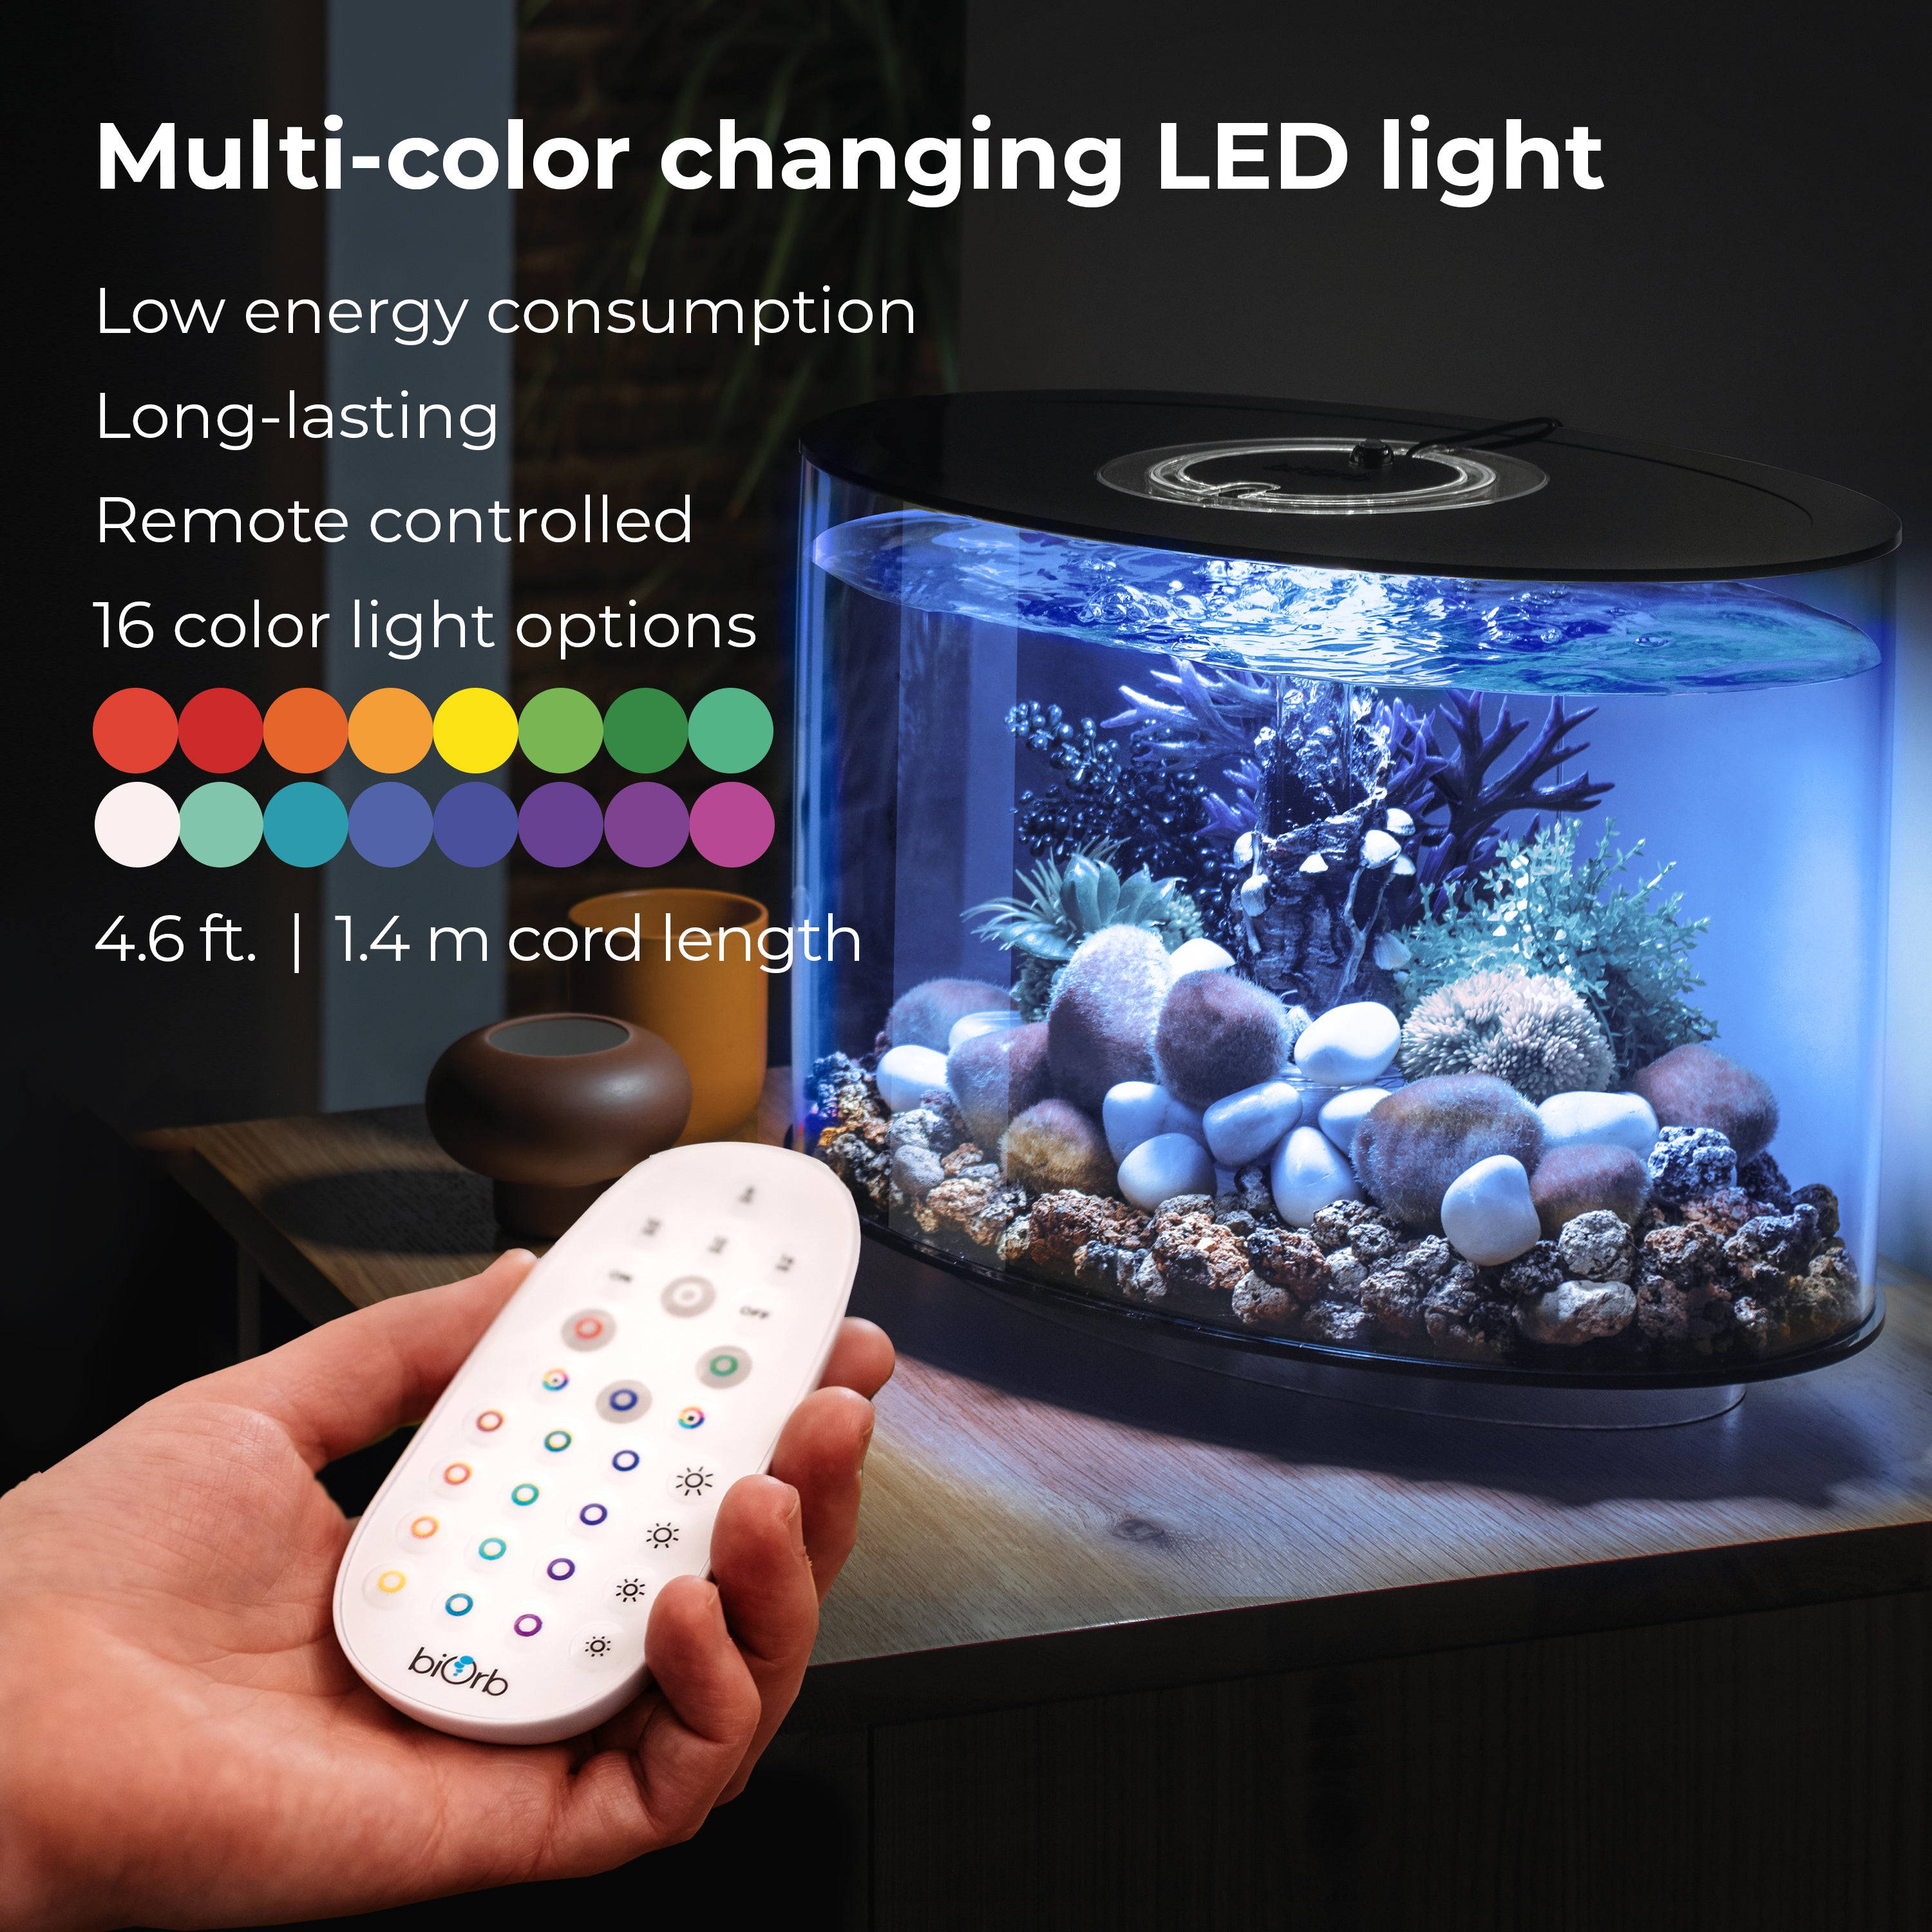 LOOP 15 Aquarium with MCR Light - 4 gallon features Multi-color changing LED light